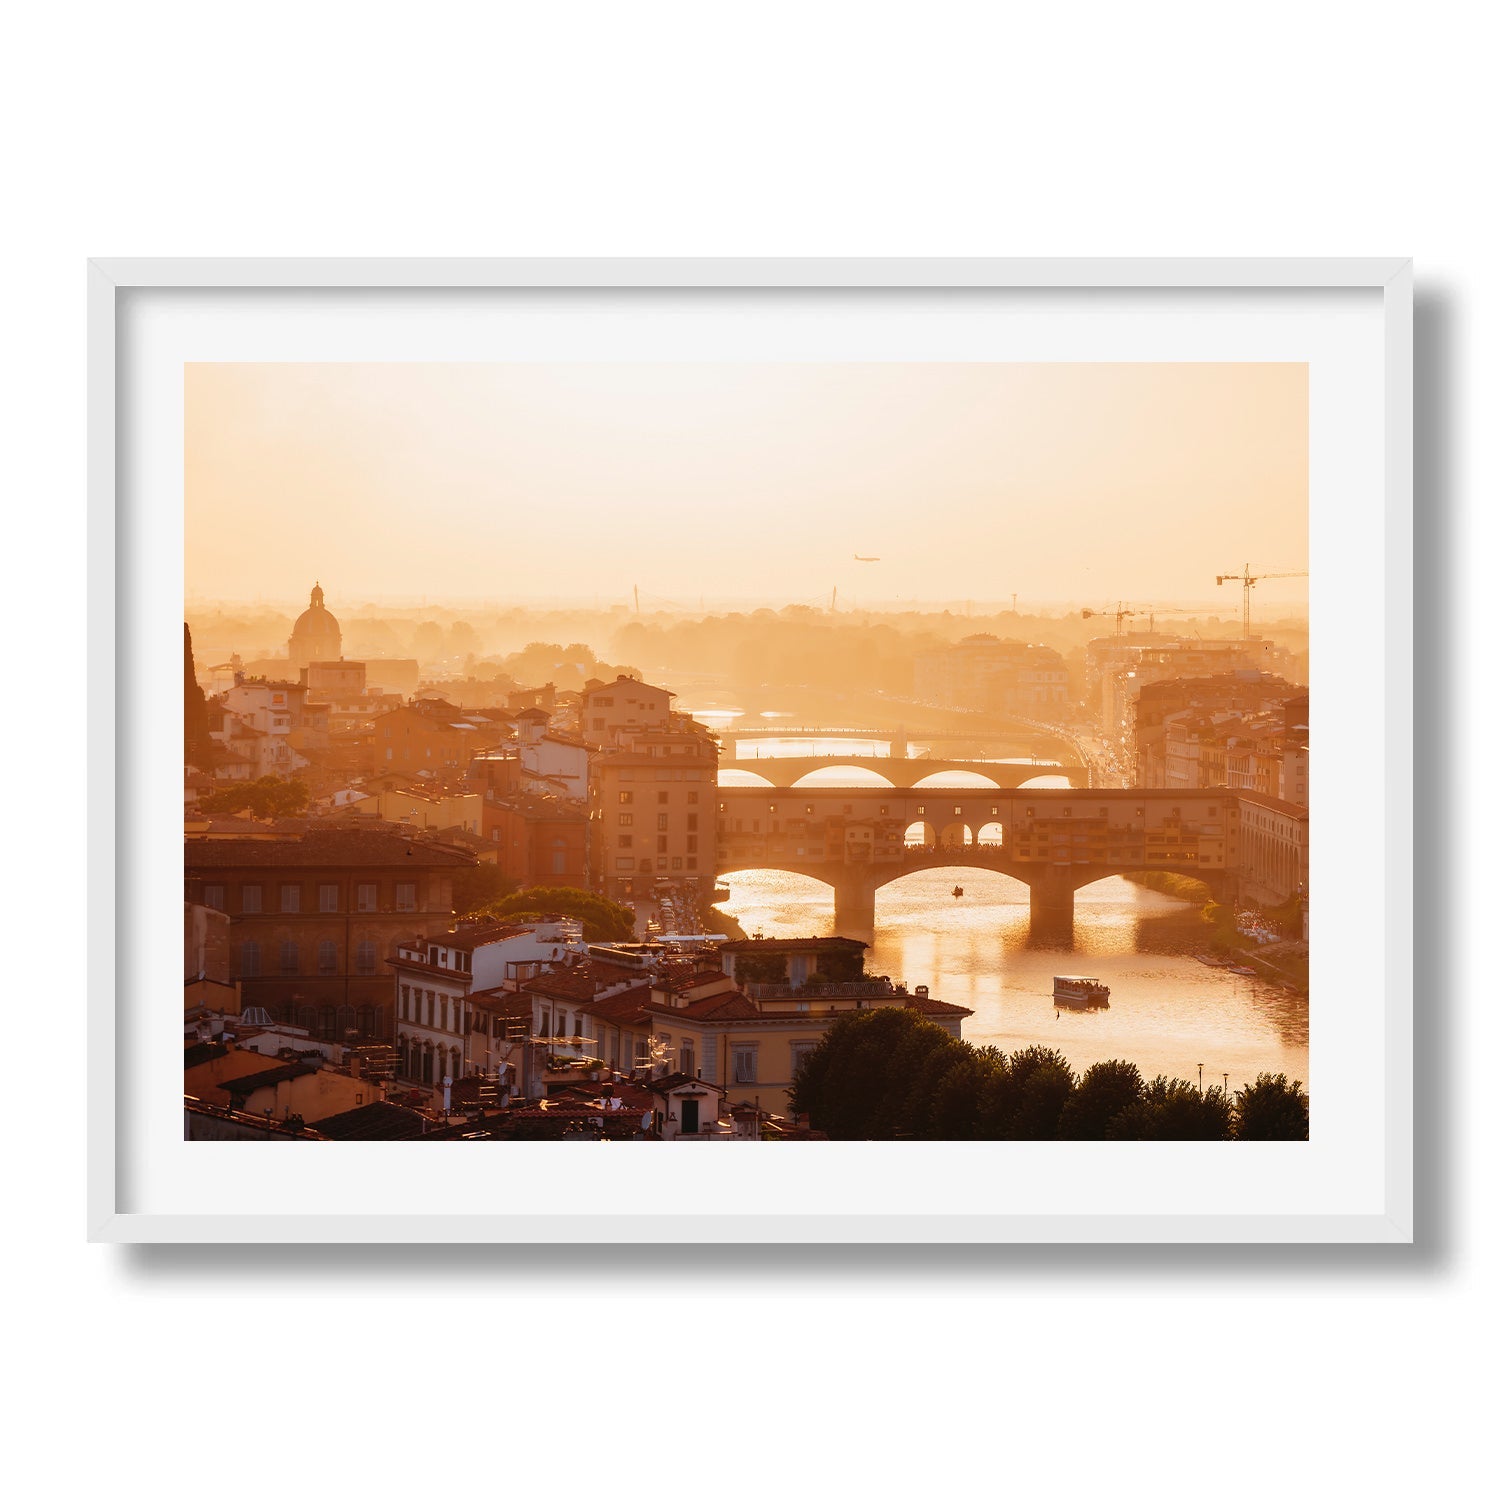 Bridges of Florence at Sunset - Peter Yan Studio